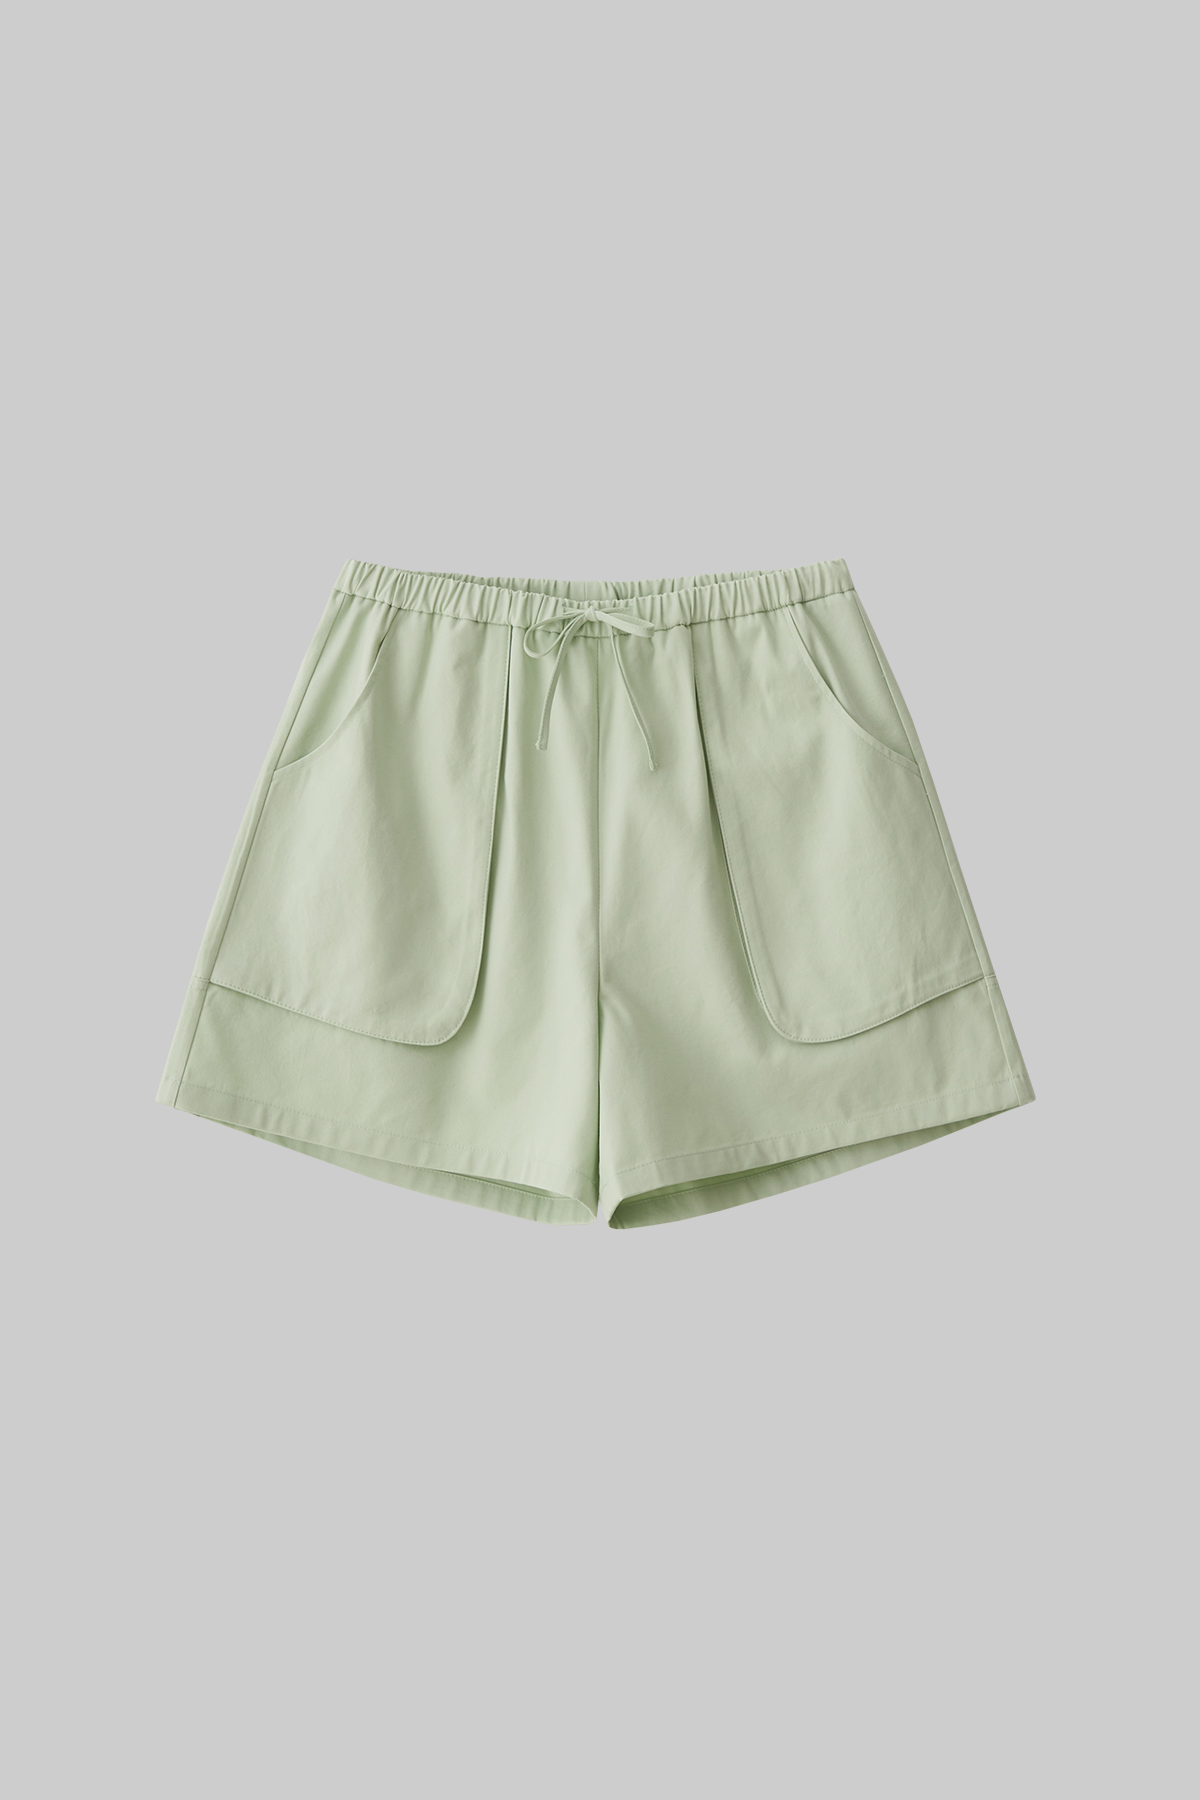 Pocket line half pants(mint)